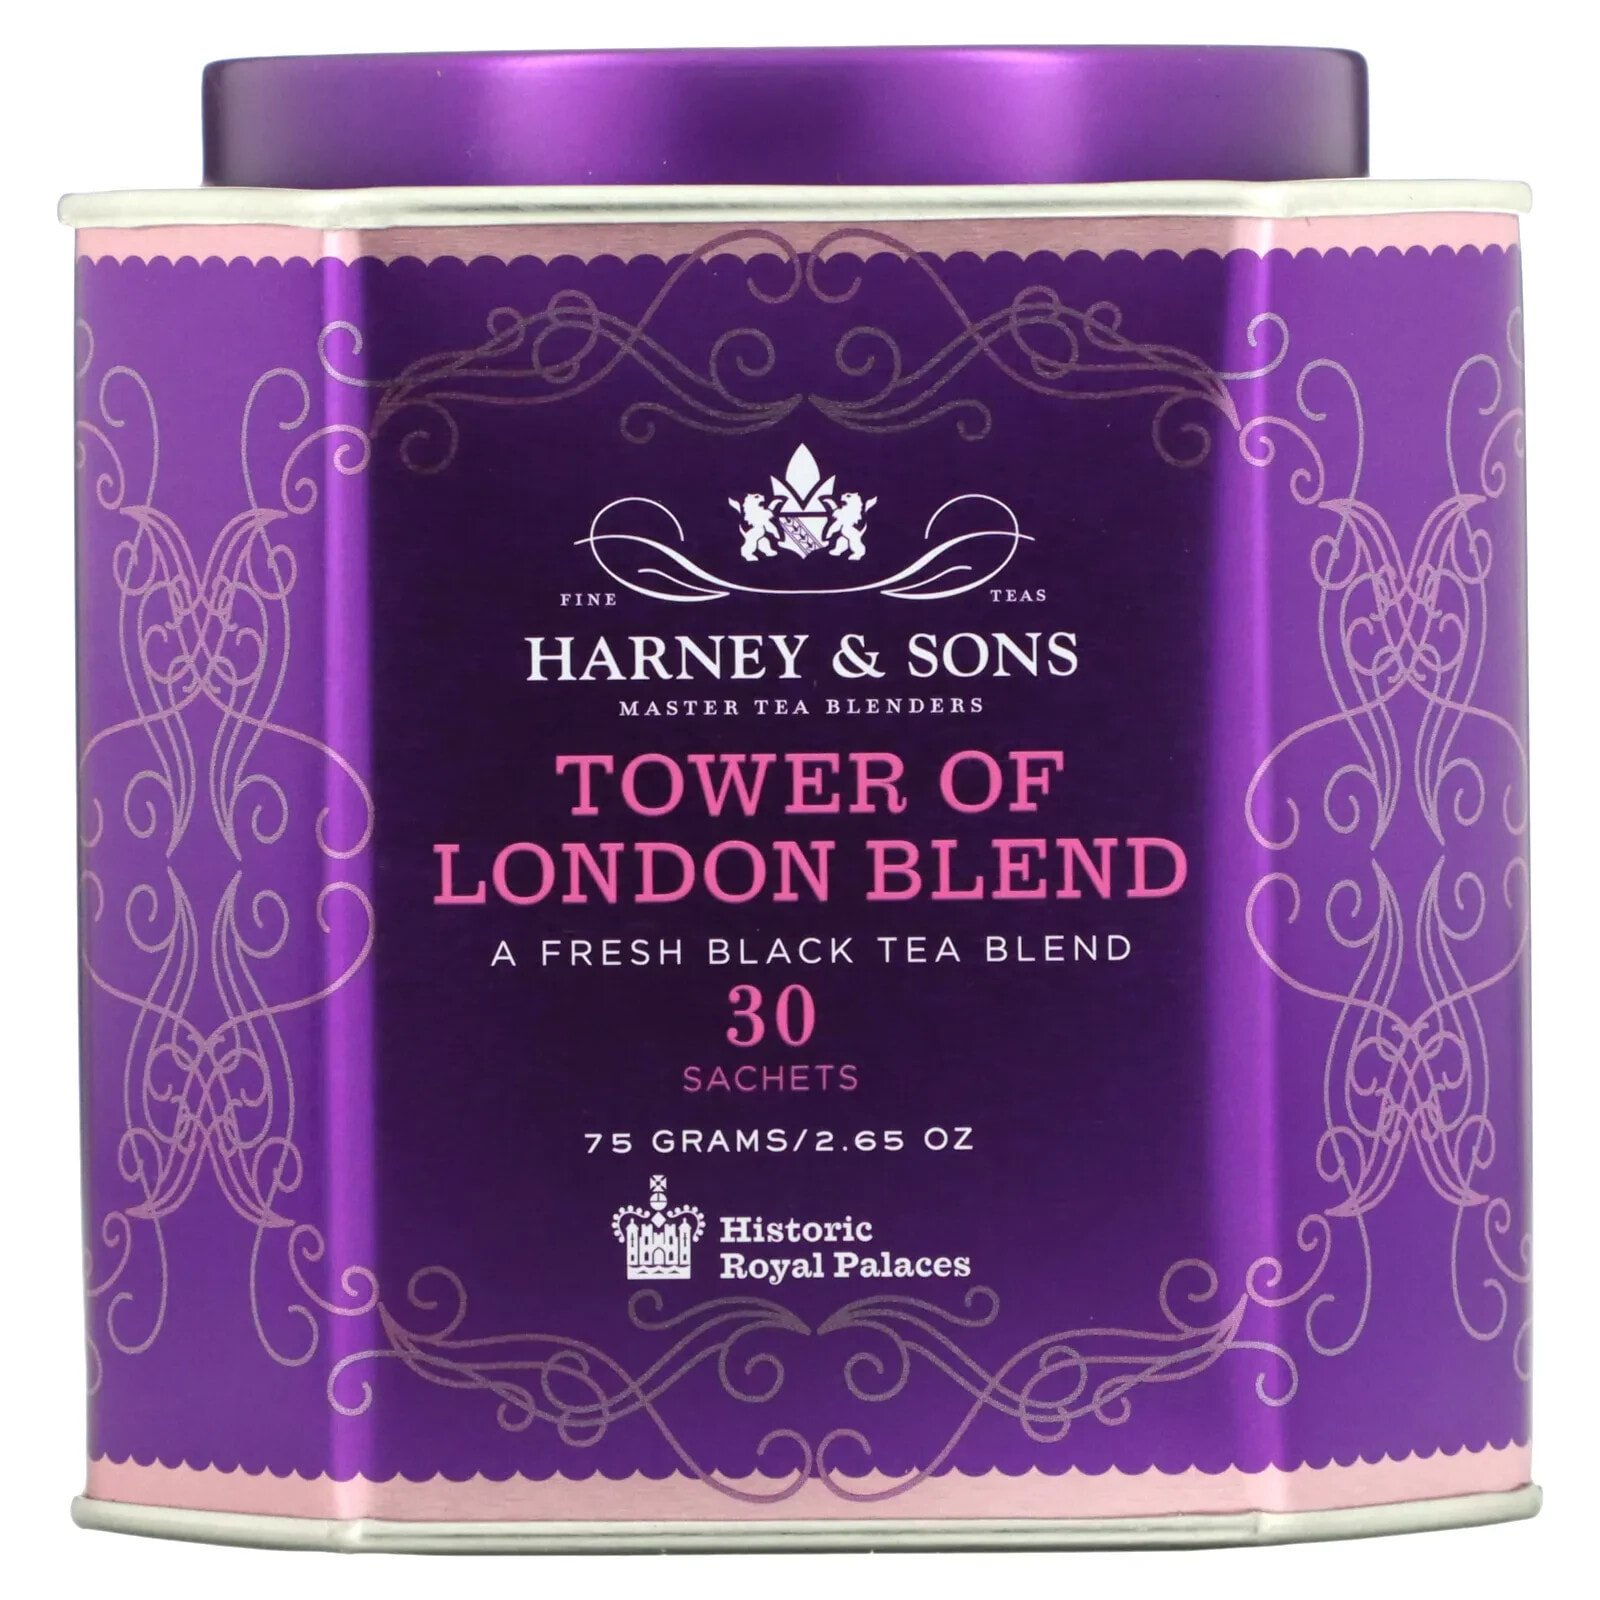 Tower of London Blend, A Fresh Black Tea Blend, 30 Sachets, 2.65 oz (75 g)